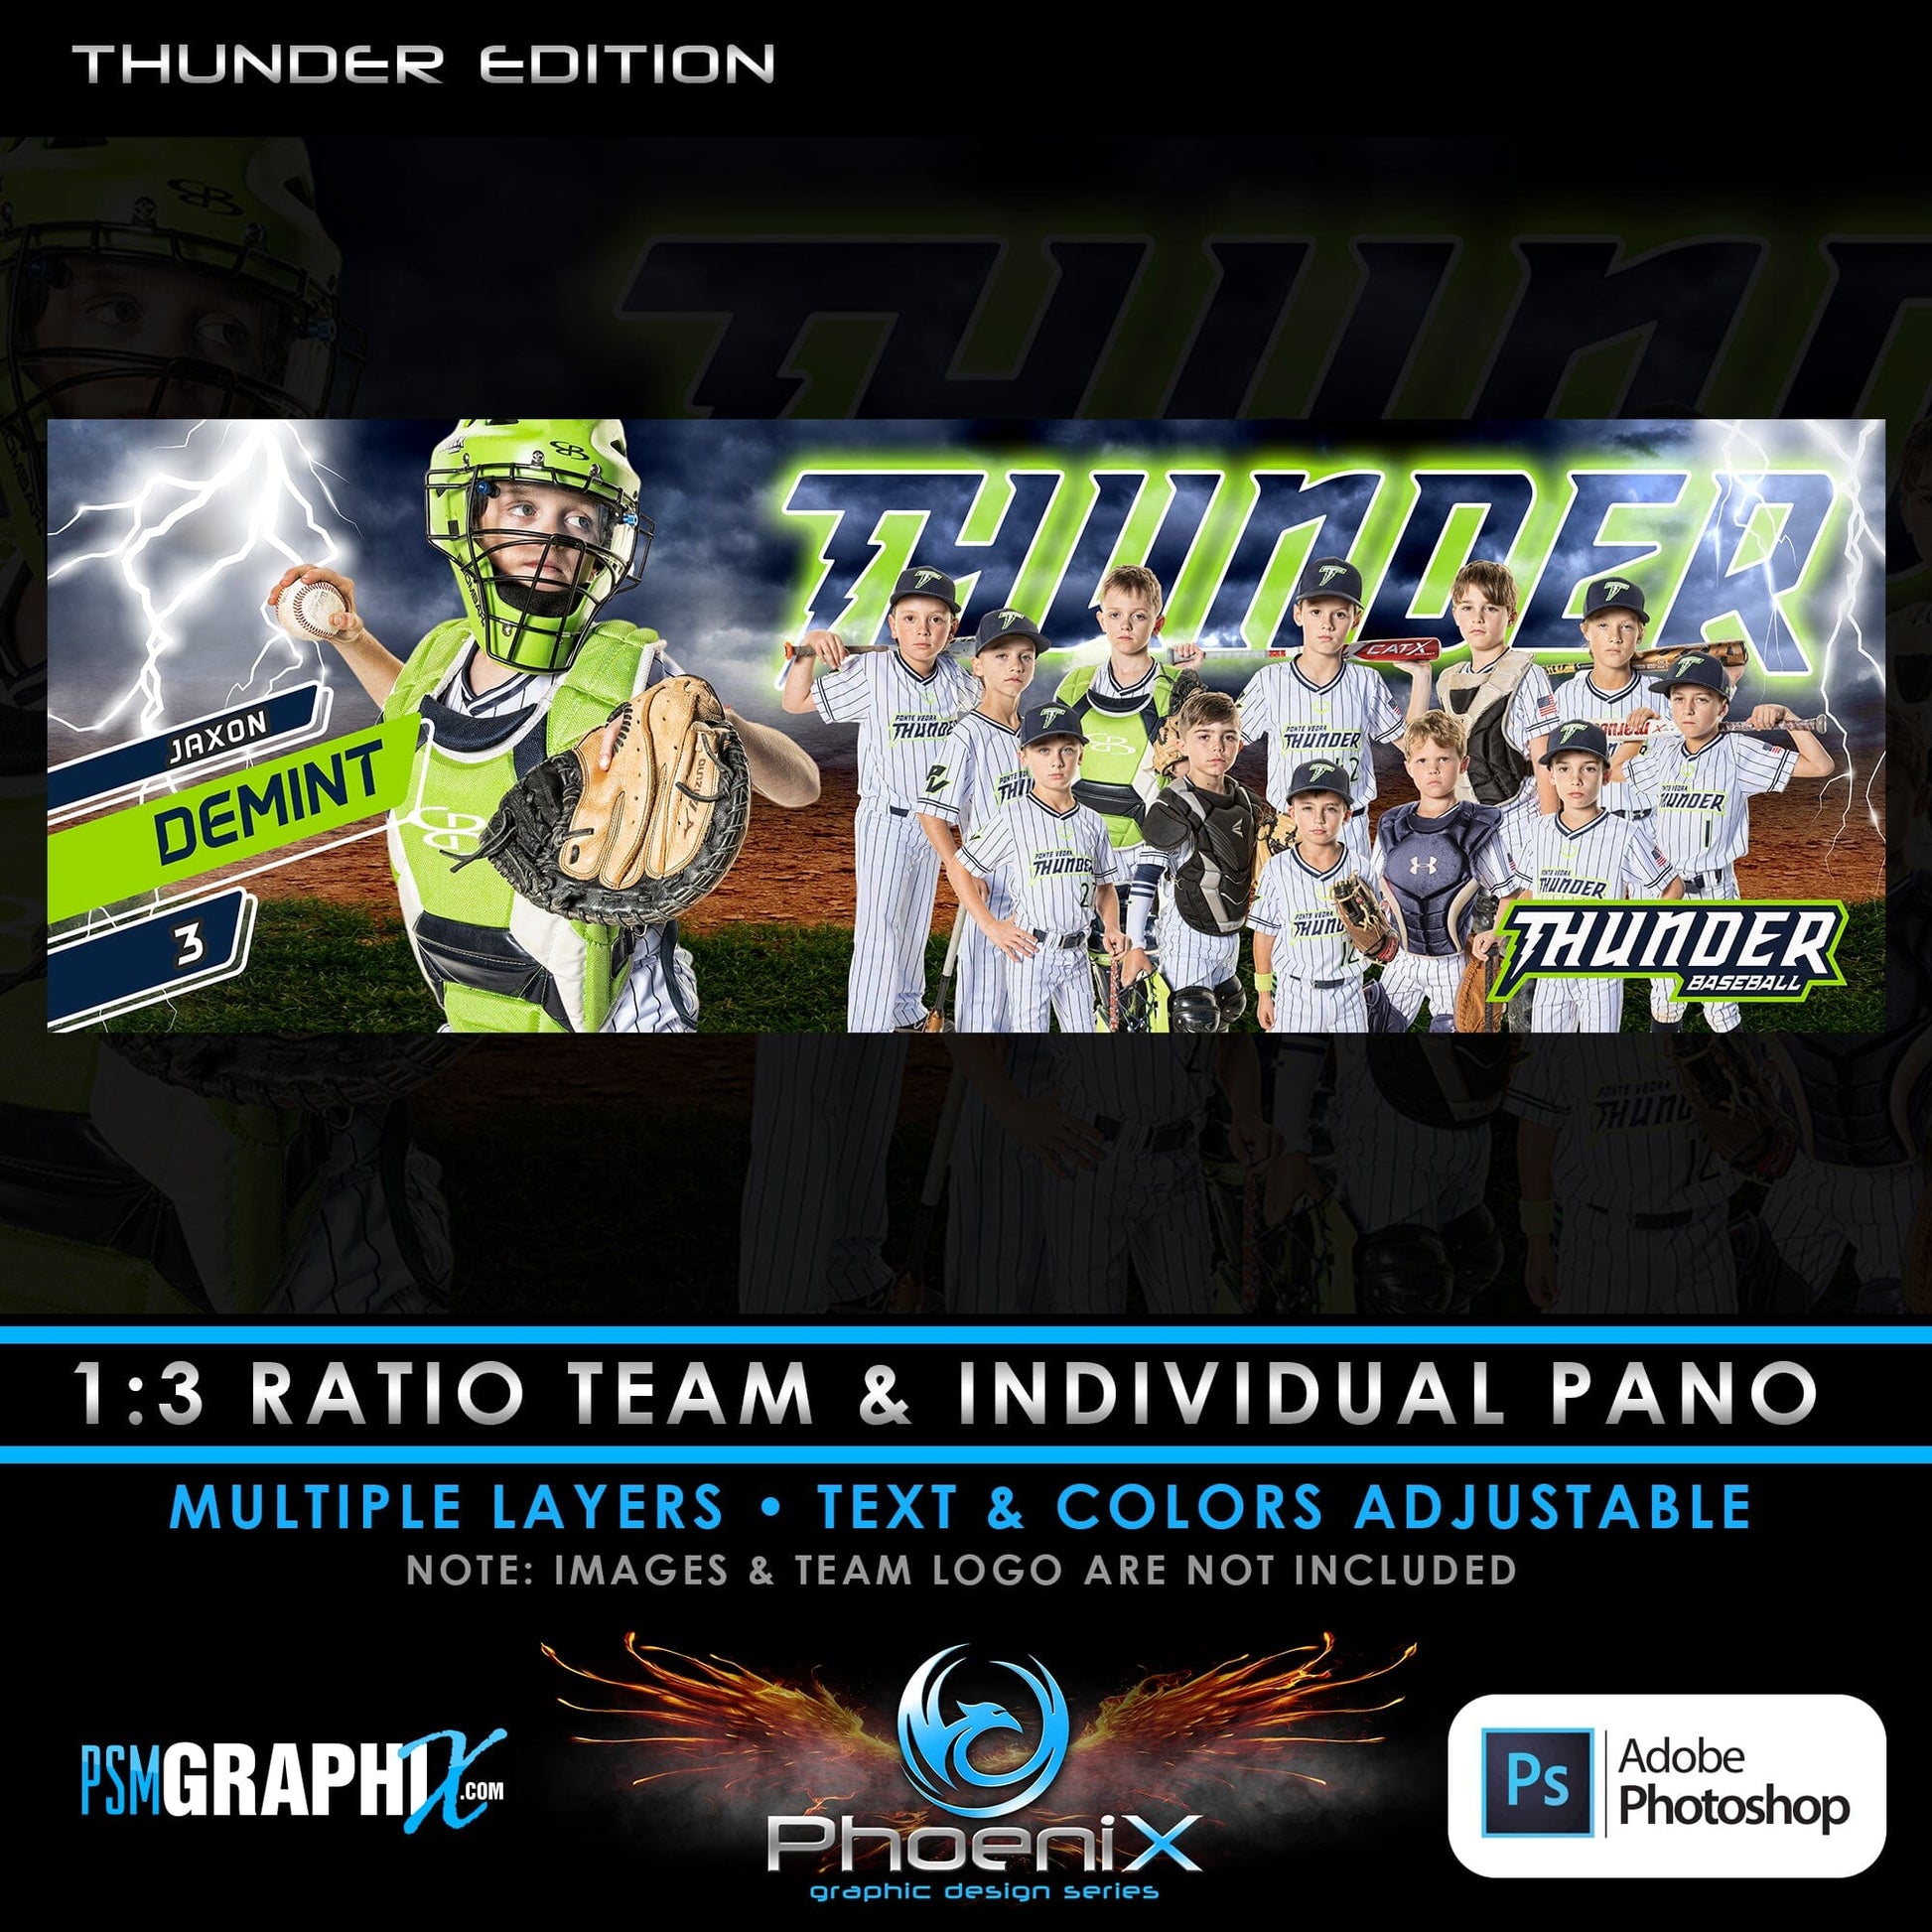 Thunder - Phoenix Series - Team & Individual Panoramic-Photoshop Template - PSMGraphix